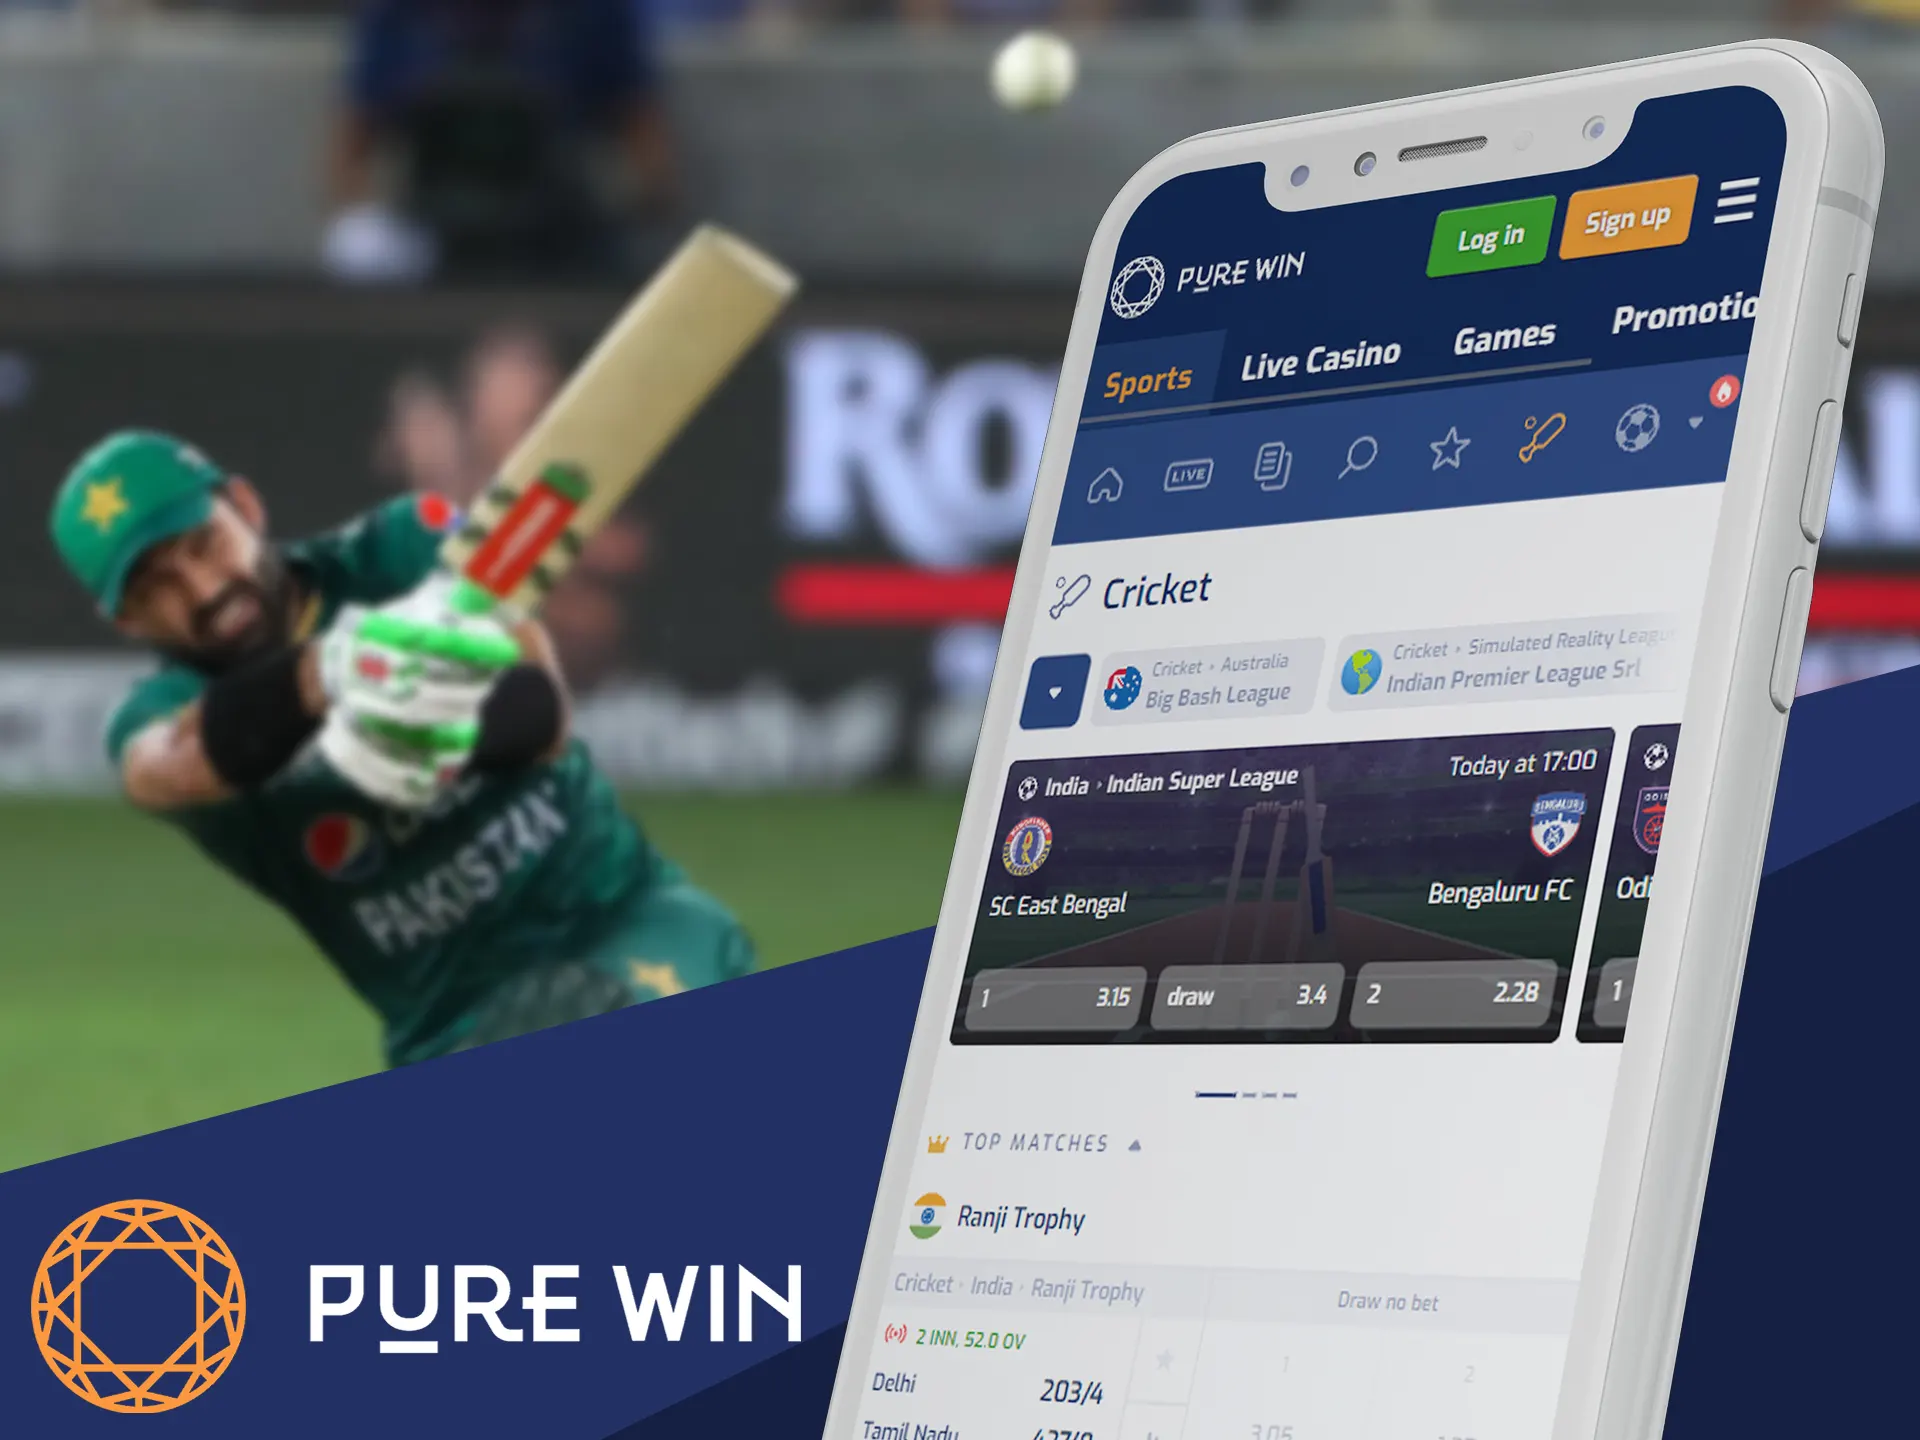 Bet on satta cricket games using Pure Win app.